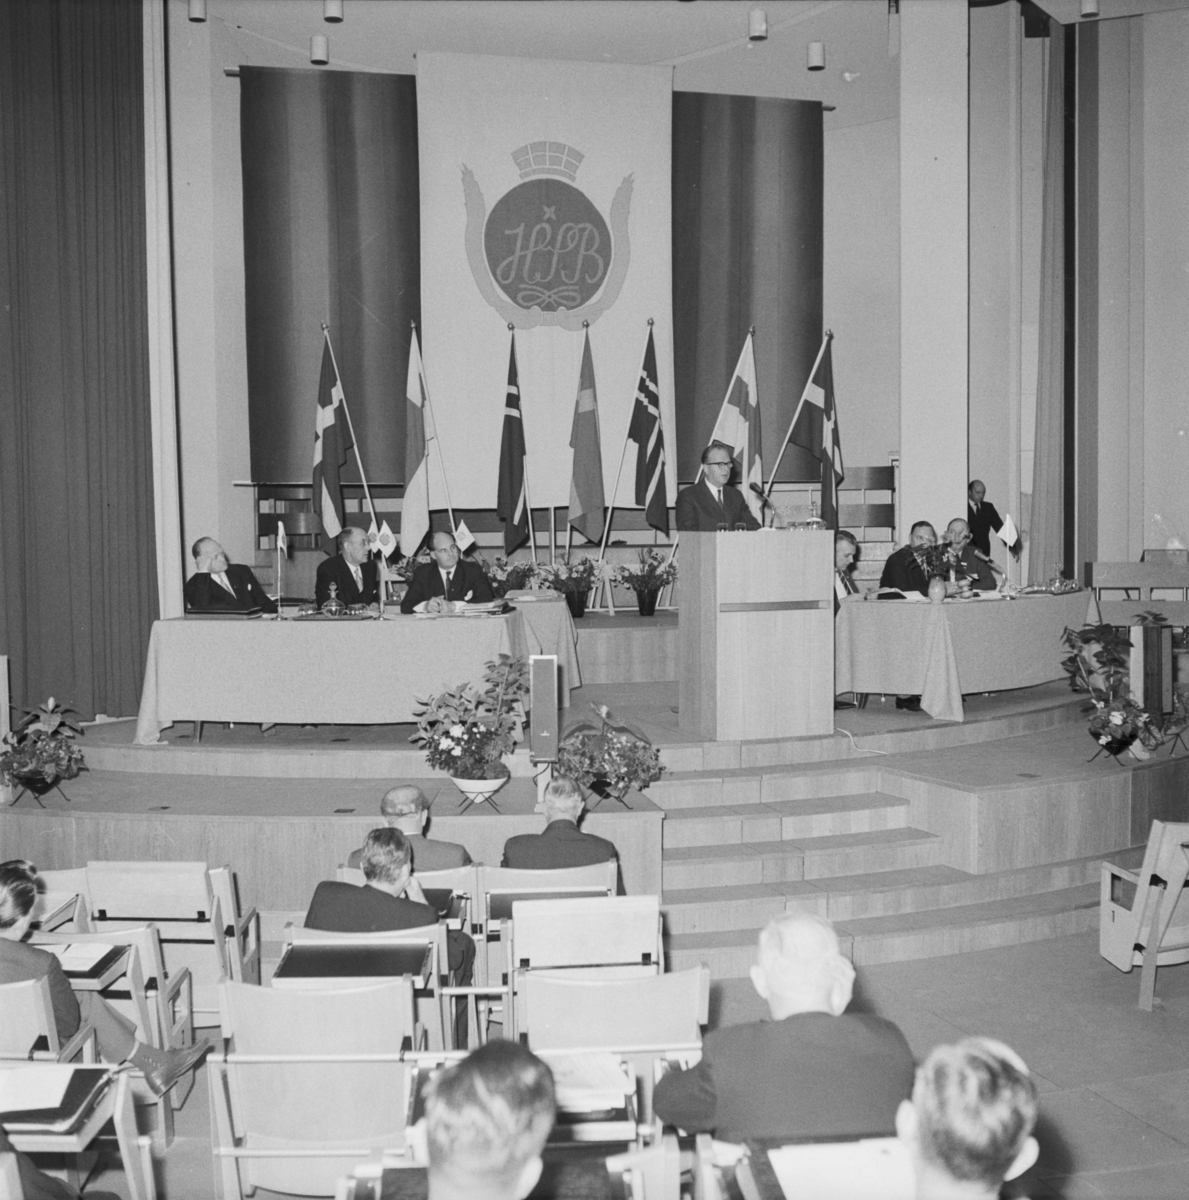 KONGRESSEN 1960 I FOLKETS HUS, BLÅ HALLEN